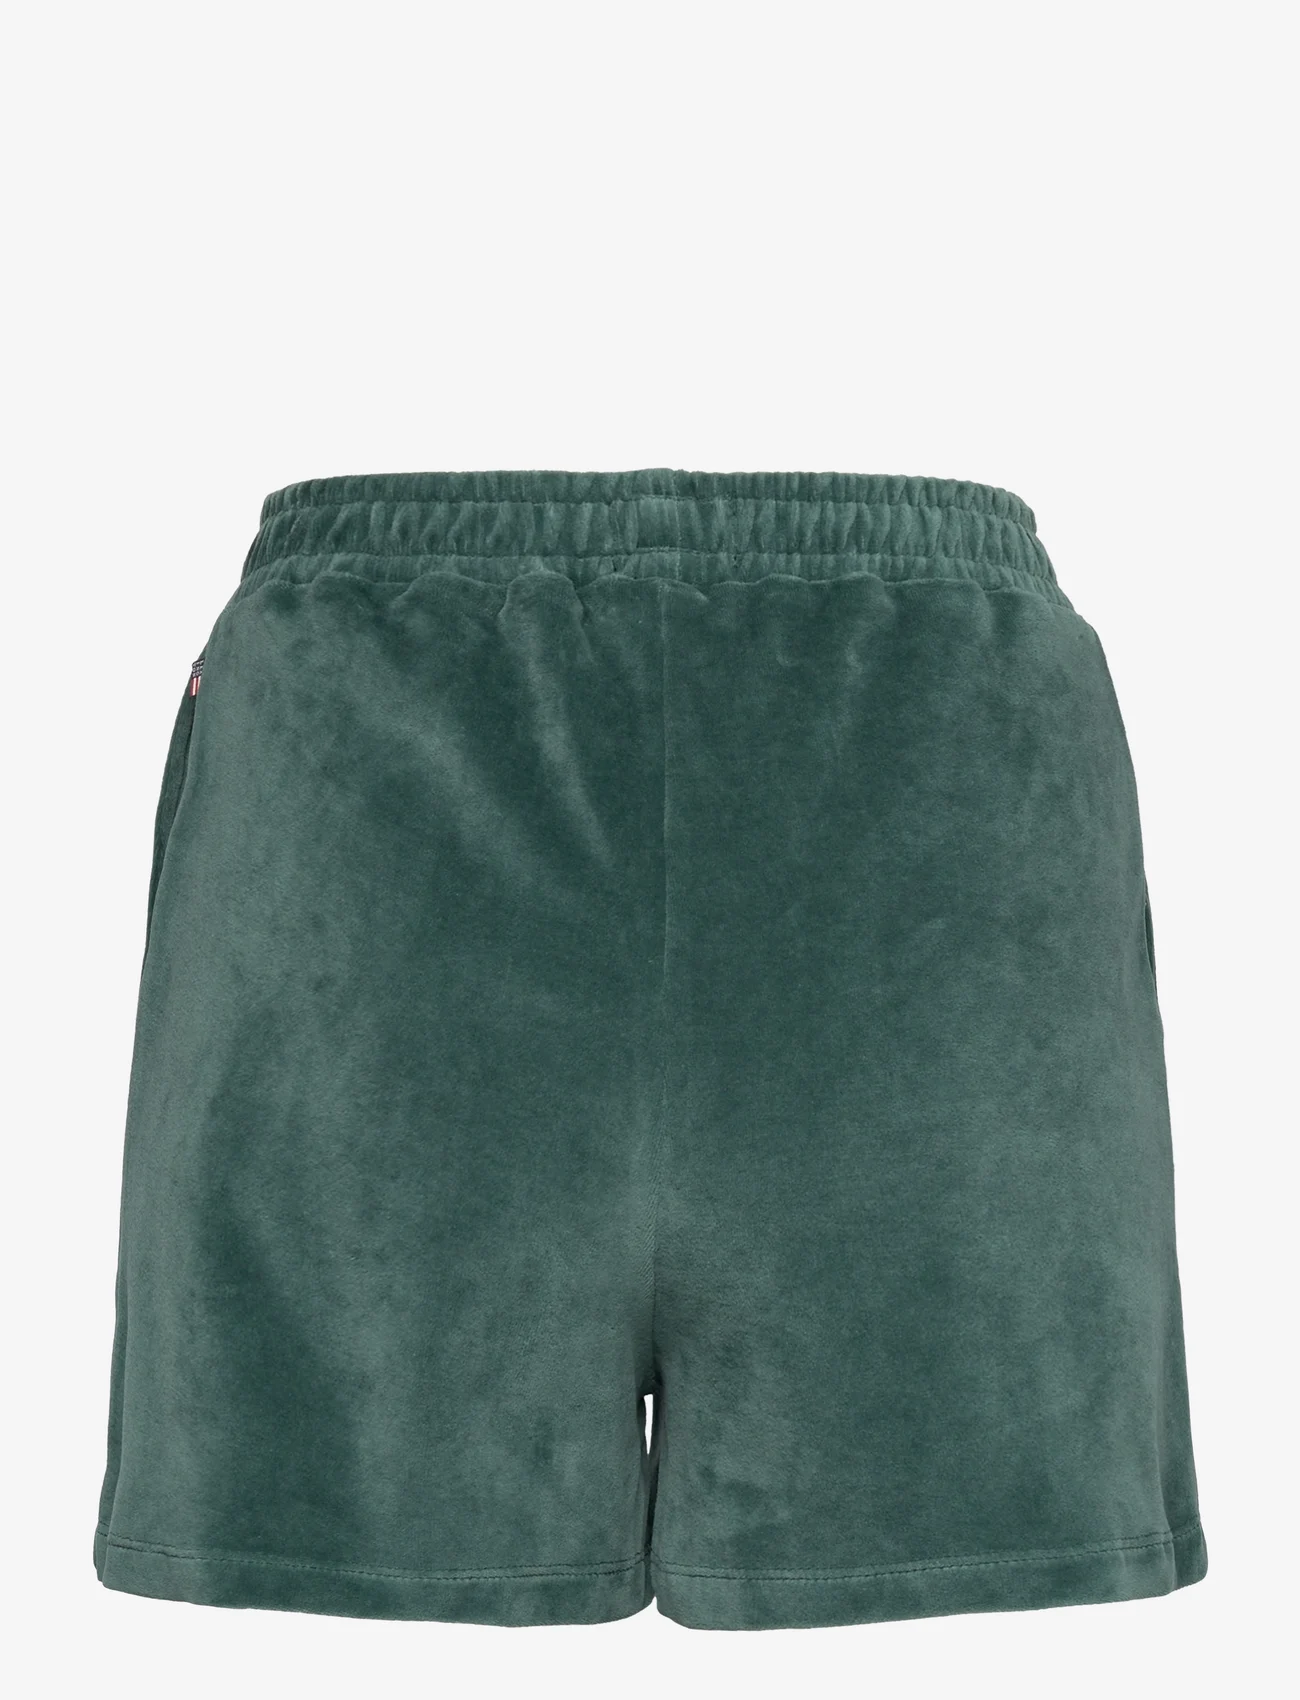 Lexington Clothing - Andy Organic Cotton Velour Shorts - lühikesed vabaajapüksid - green - 1